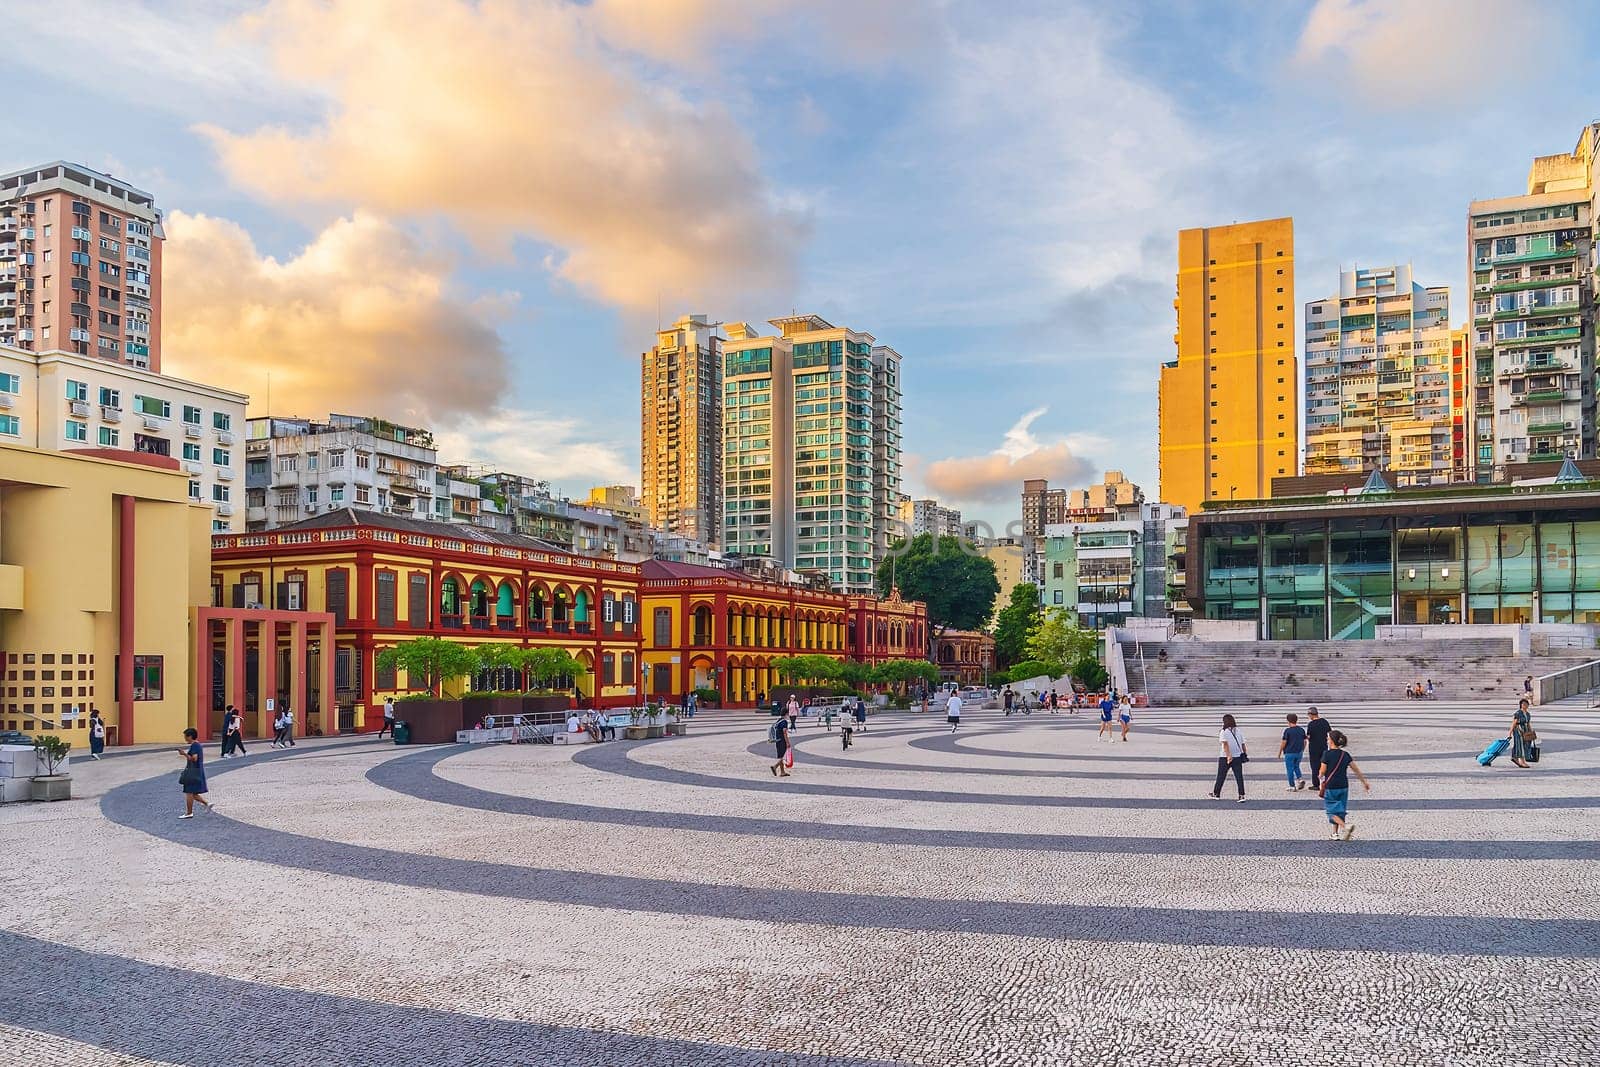 Tap Seac Square in Macau, China by f11photo